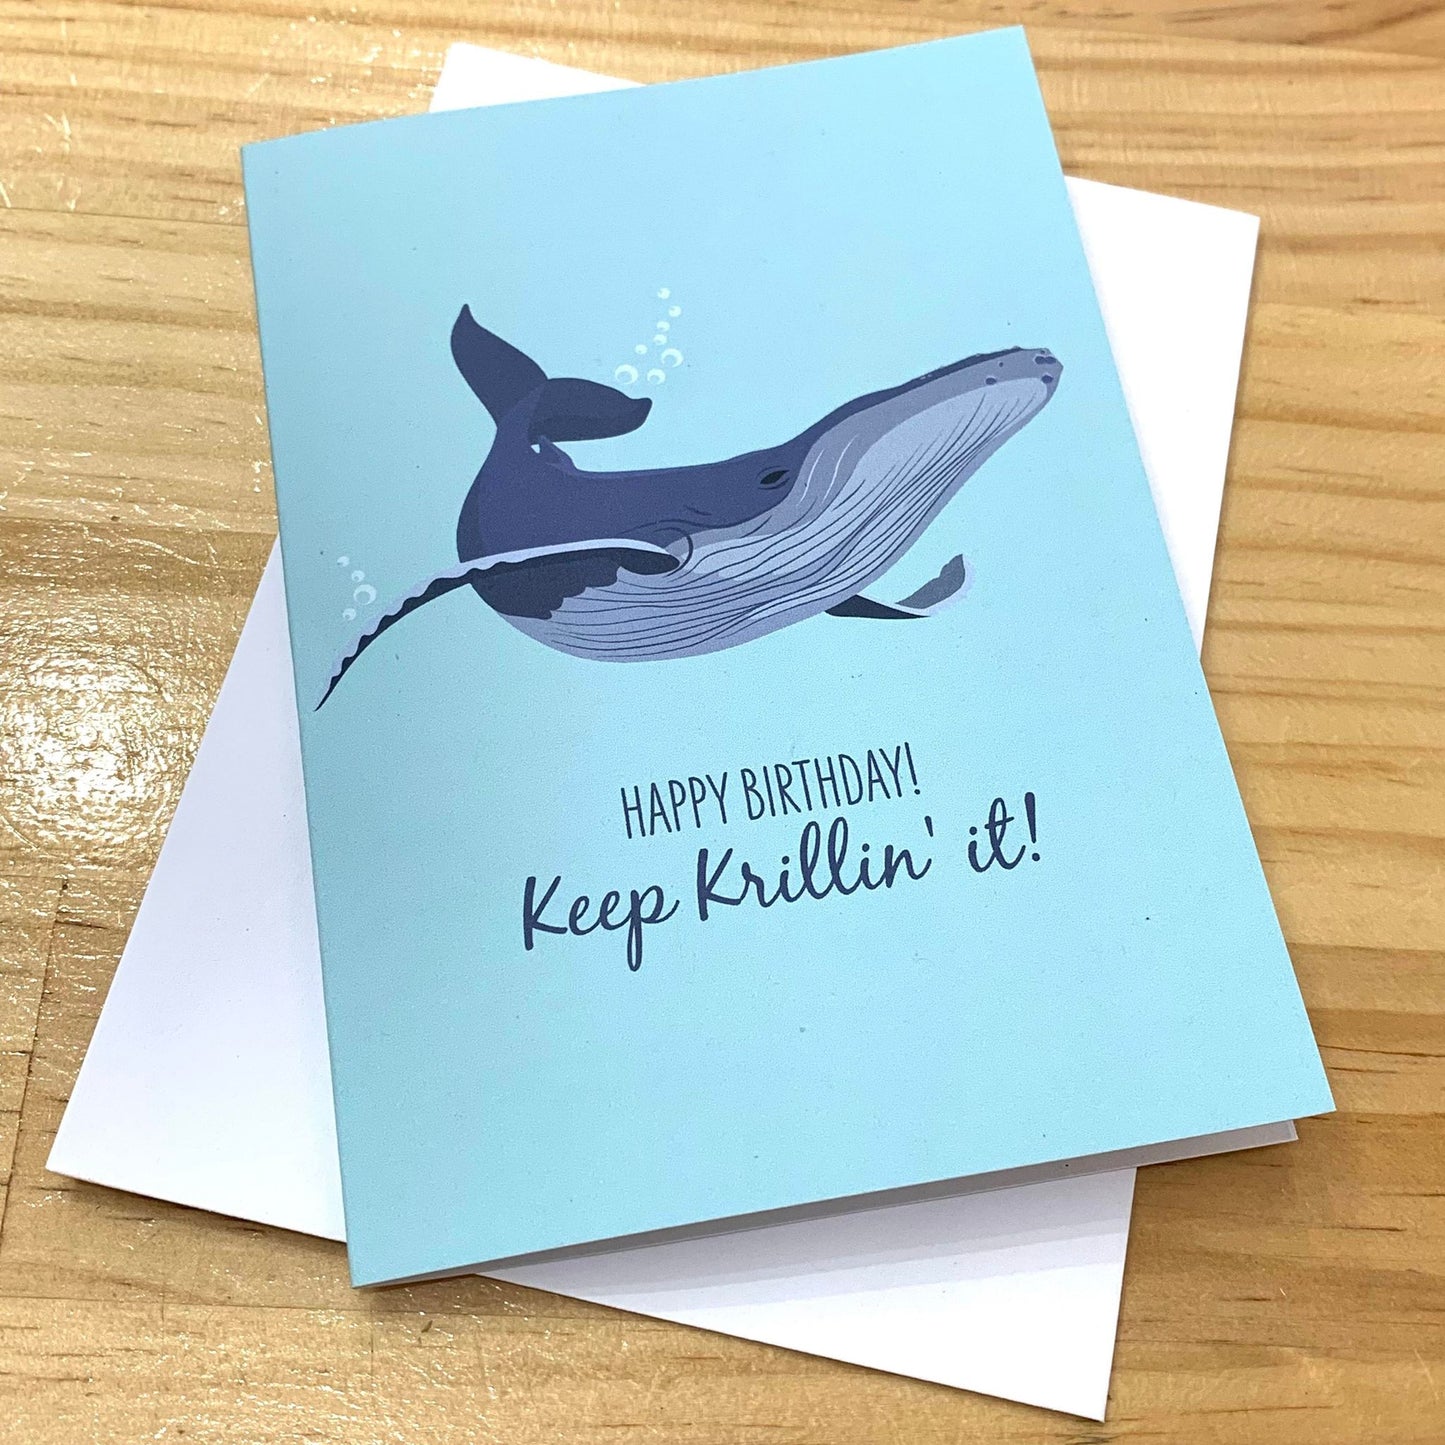 SAILFISH CREATIVE- "Keep Krillin' It" Humpback Whale Birthday Card